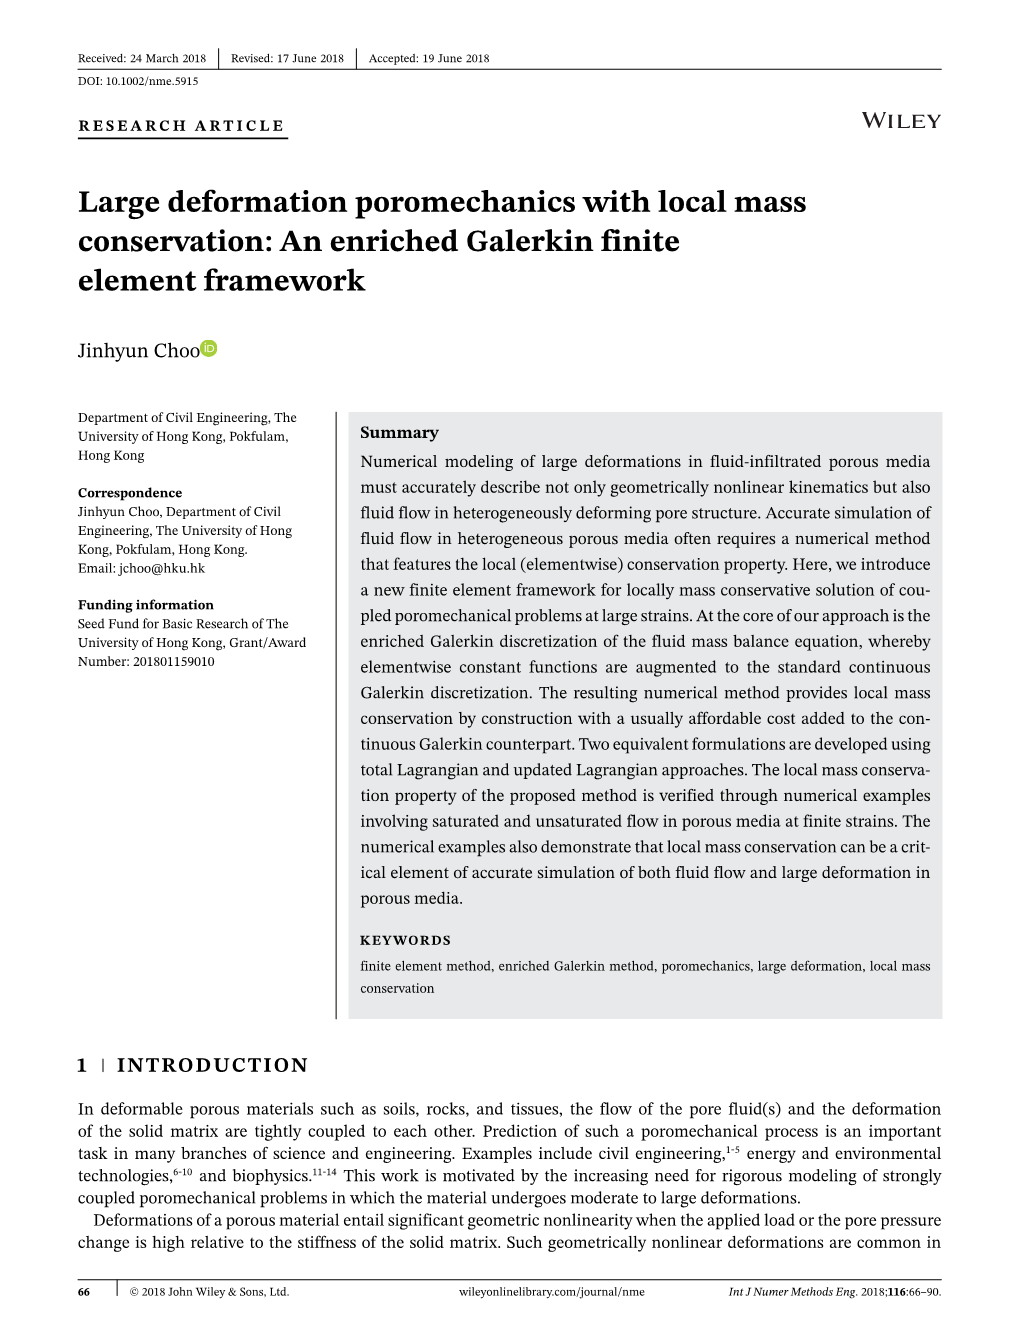 Large Deformation Poromechanics with Local Mass Conservation: an Enriched Galerkin Finite Element Framework